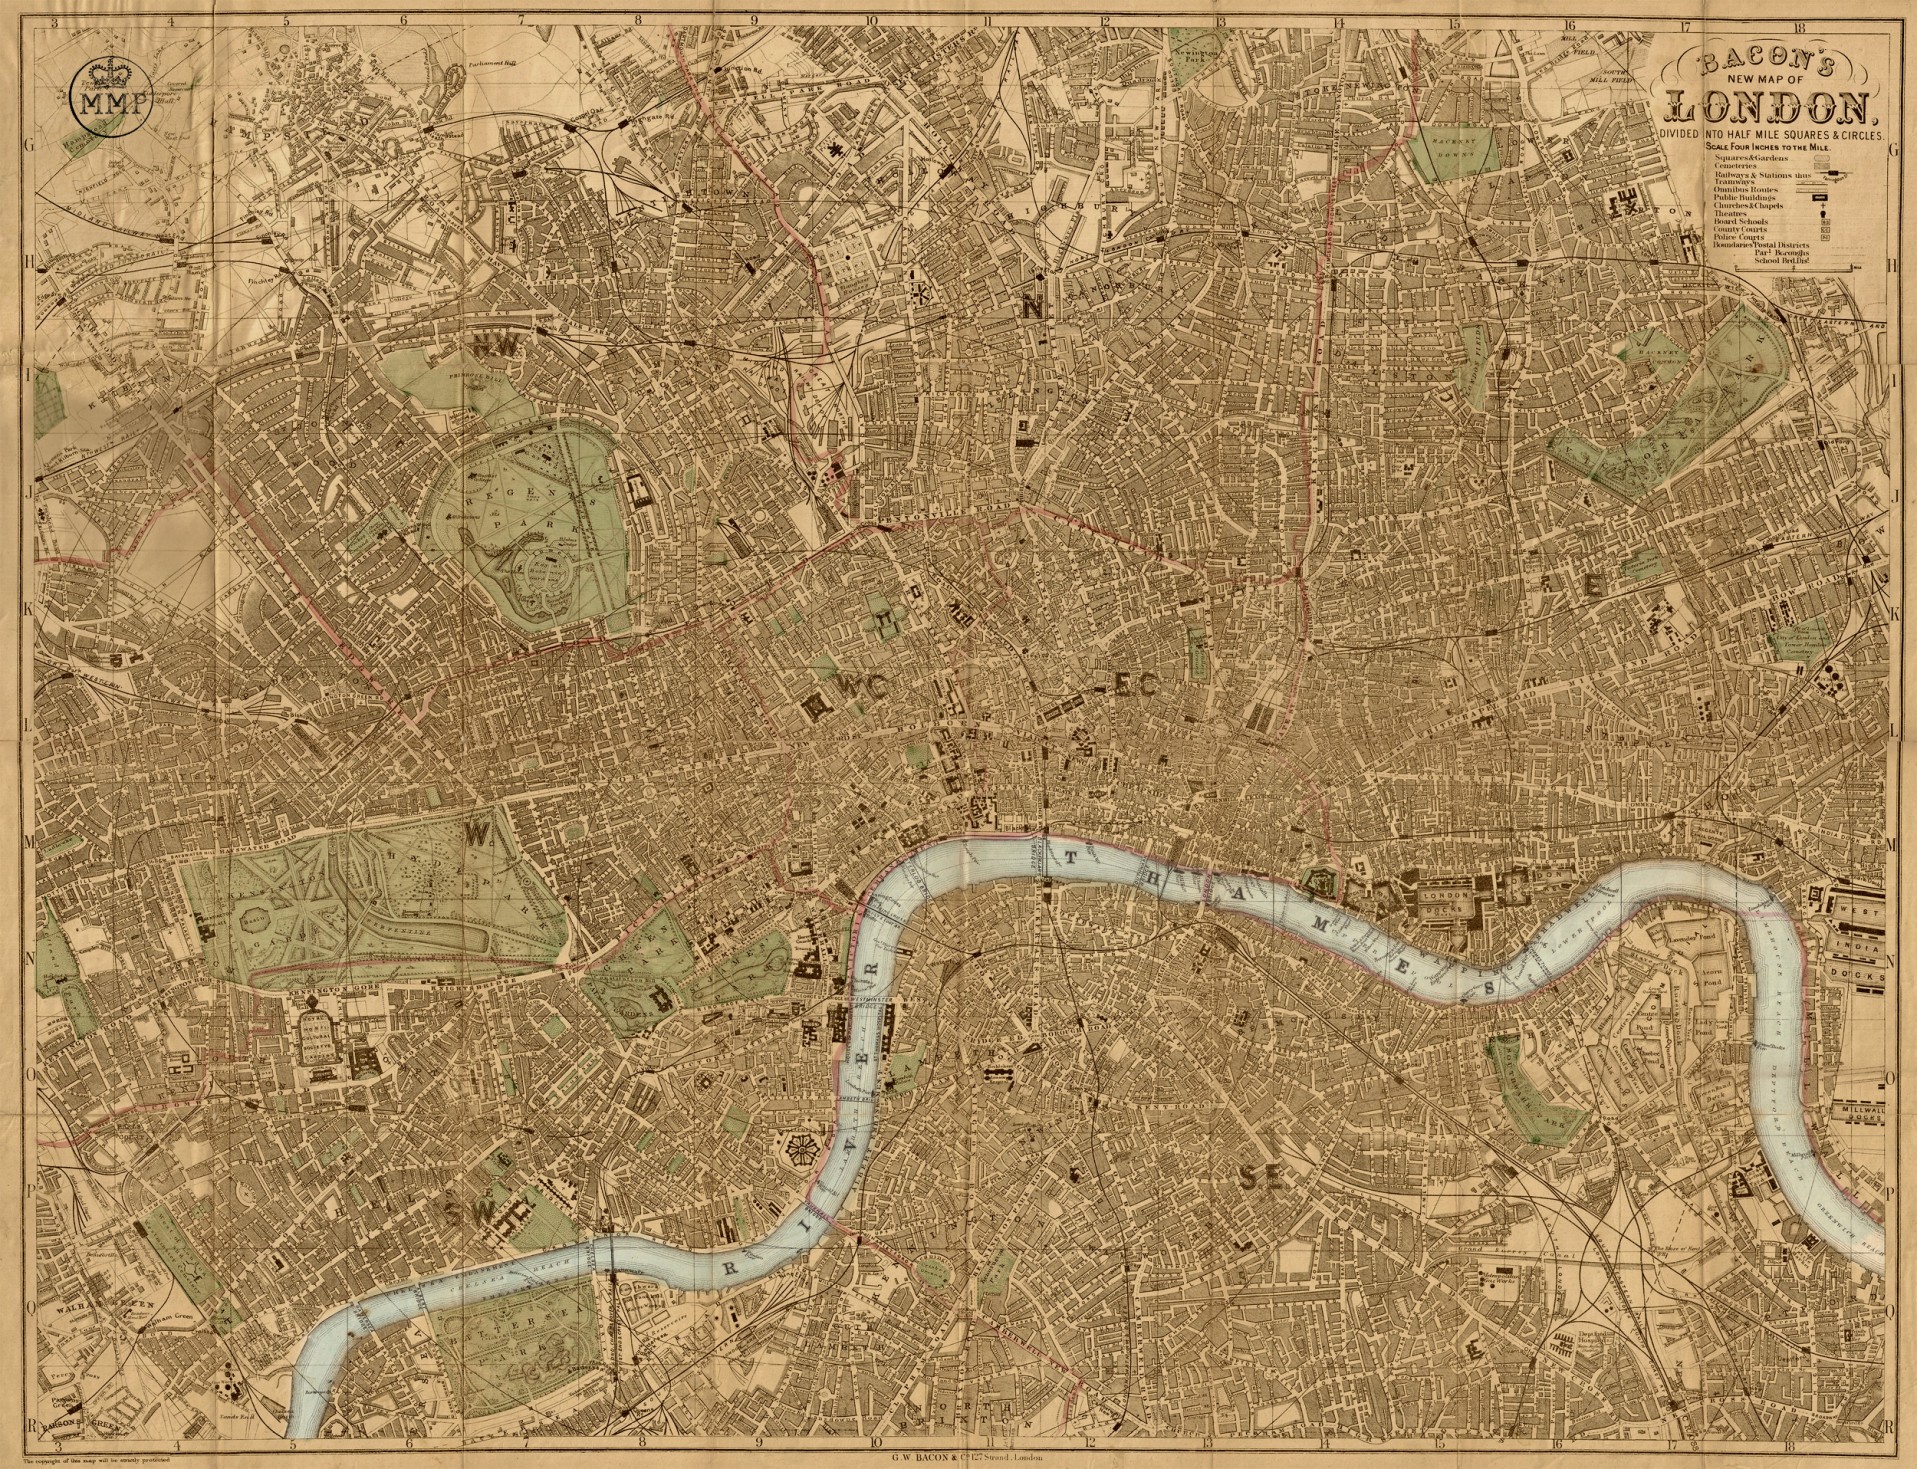 London Majesty Maps And Prints